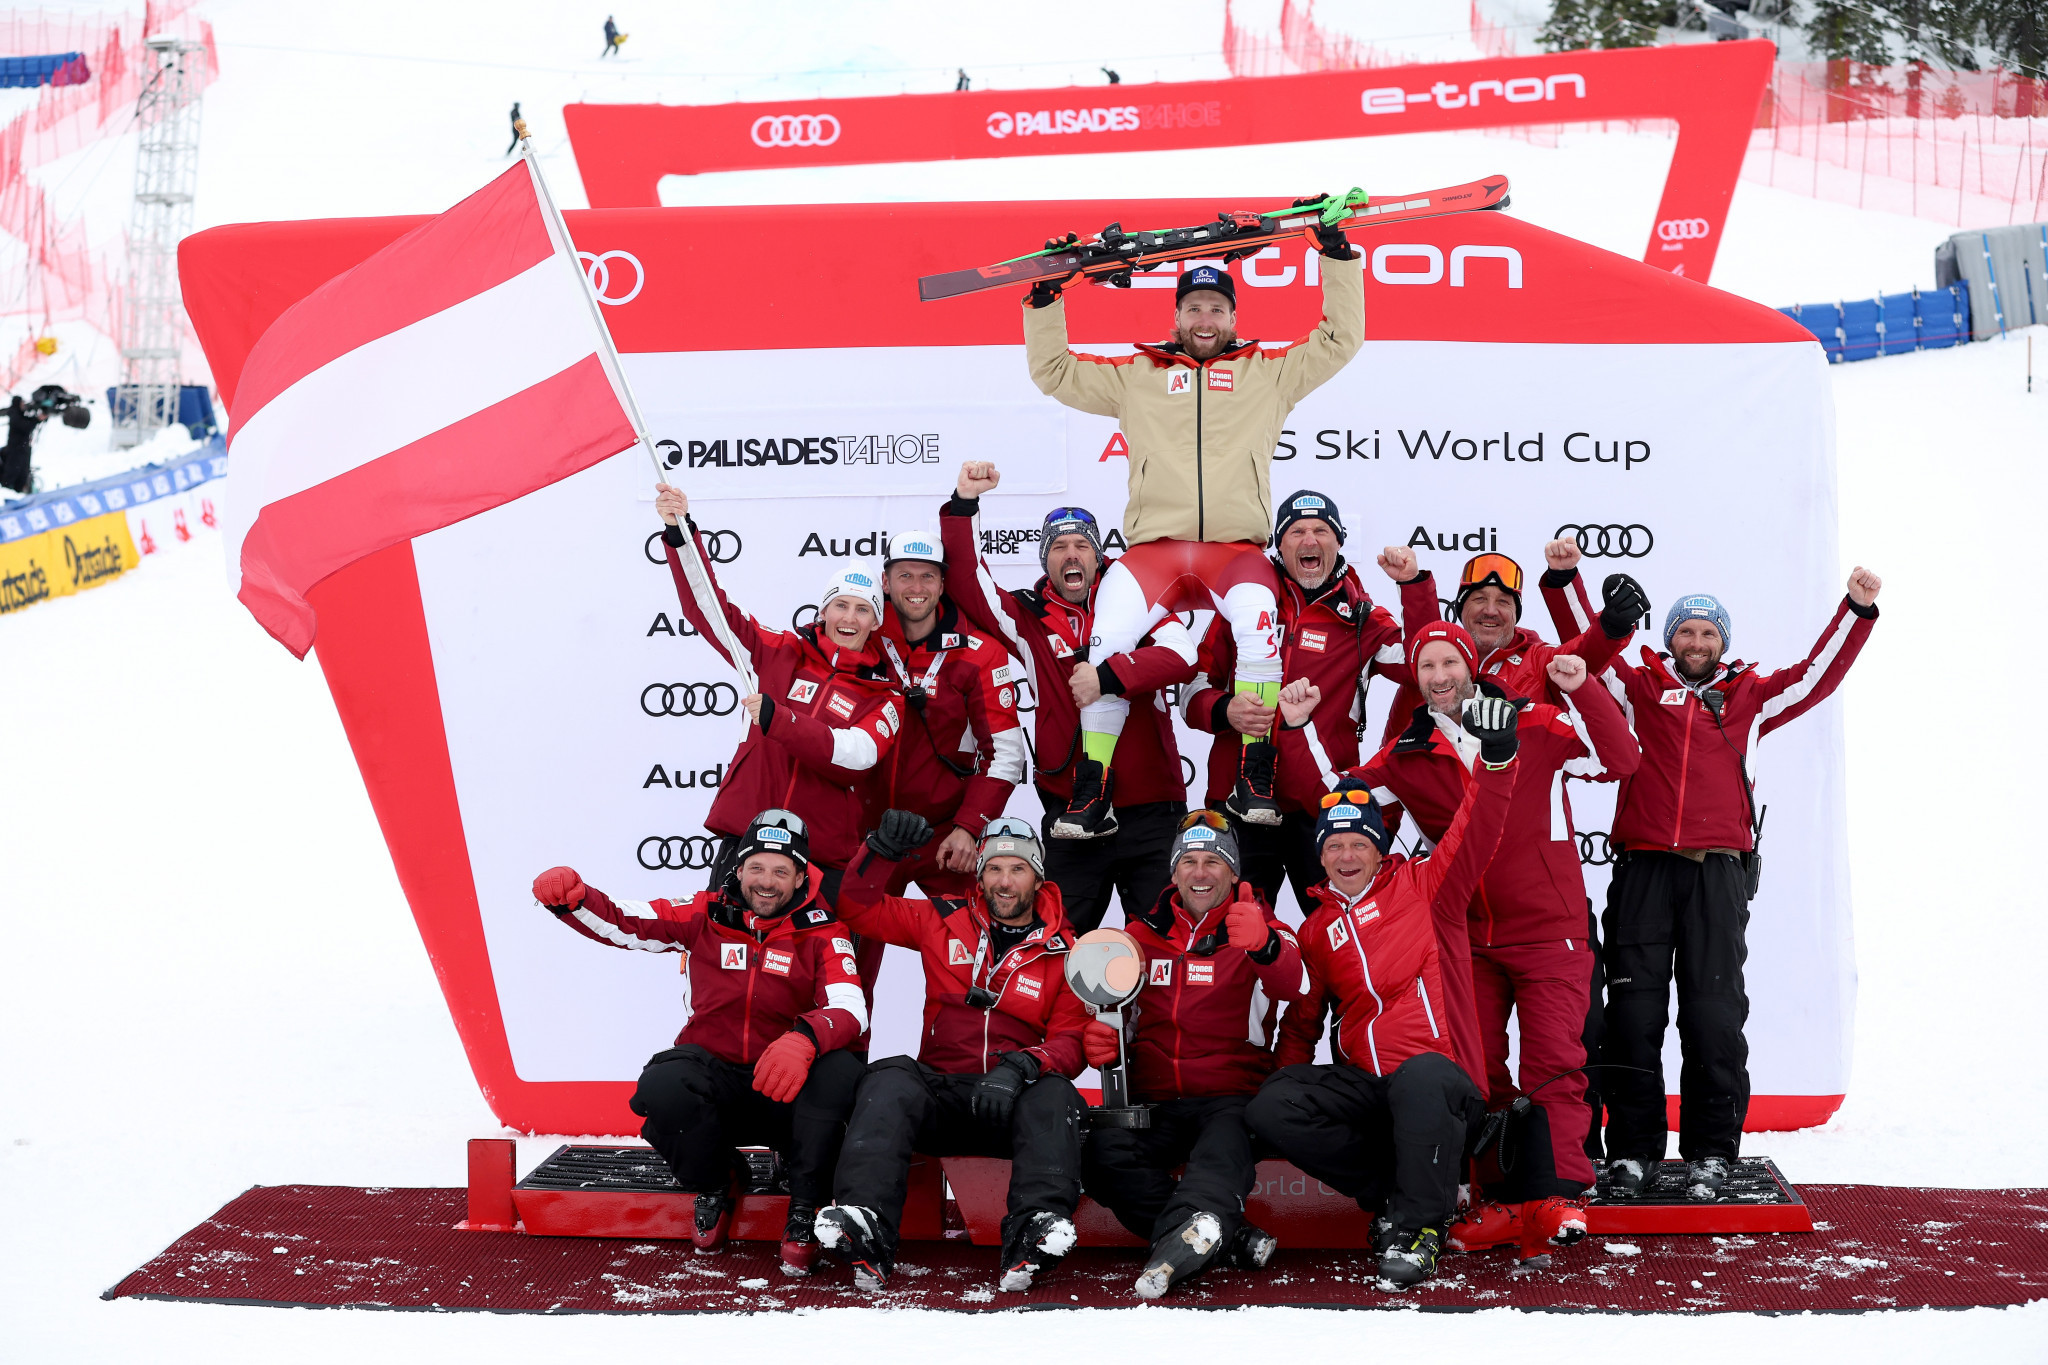 Schwarz pips Odermatt to giant slalom Alpine Ski World Cup gold in Palisades Tahoe